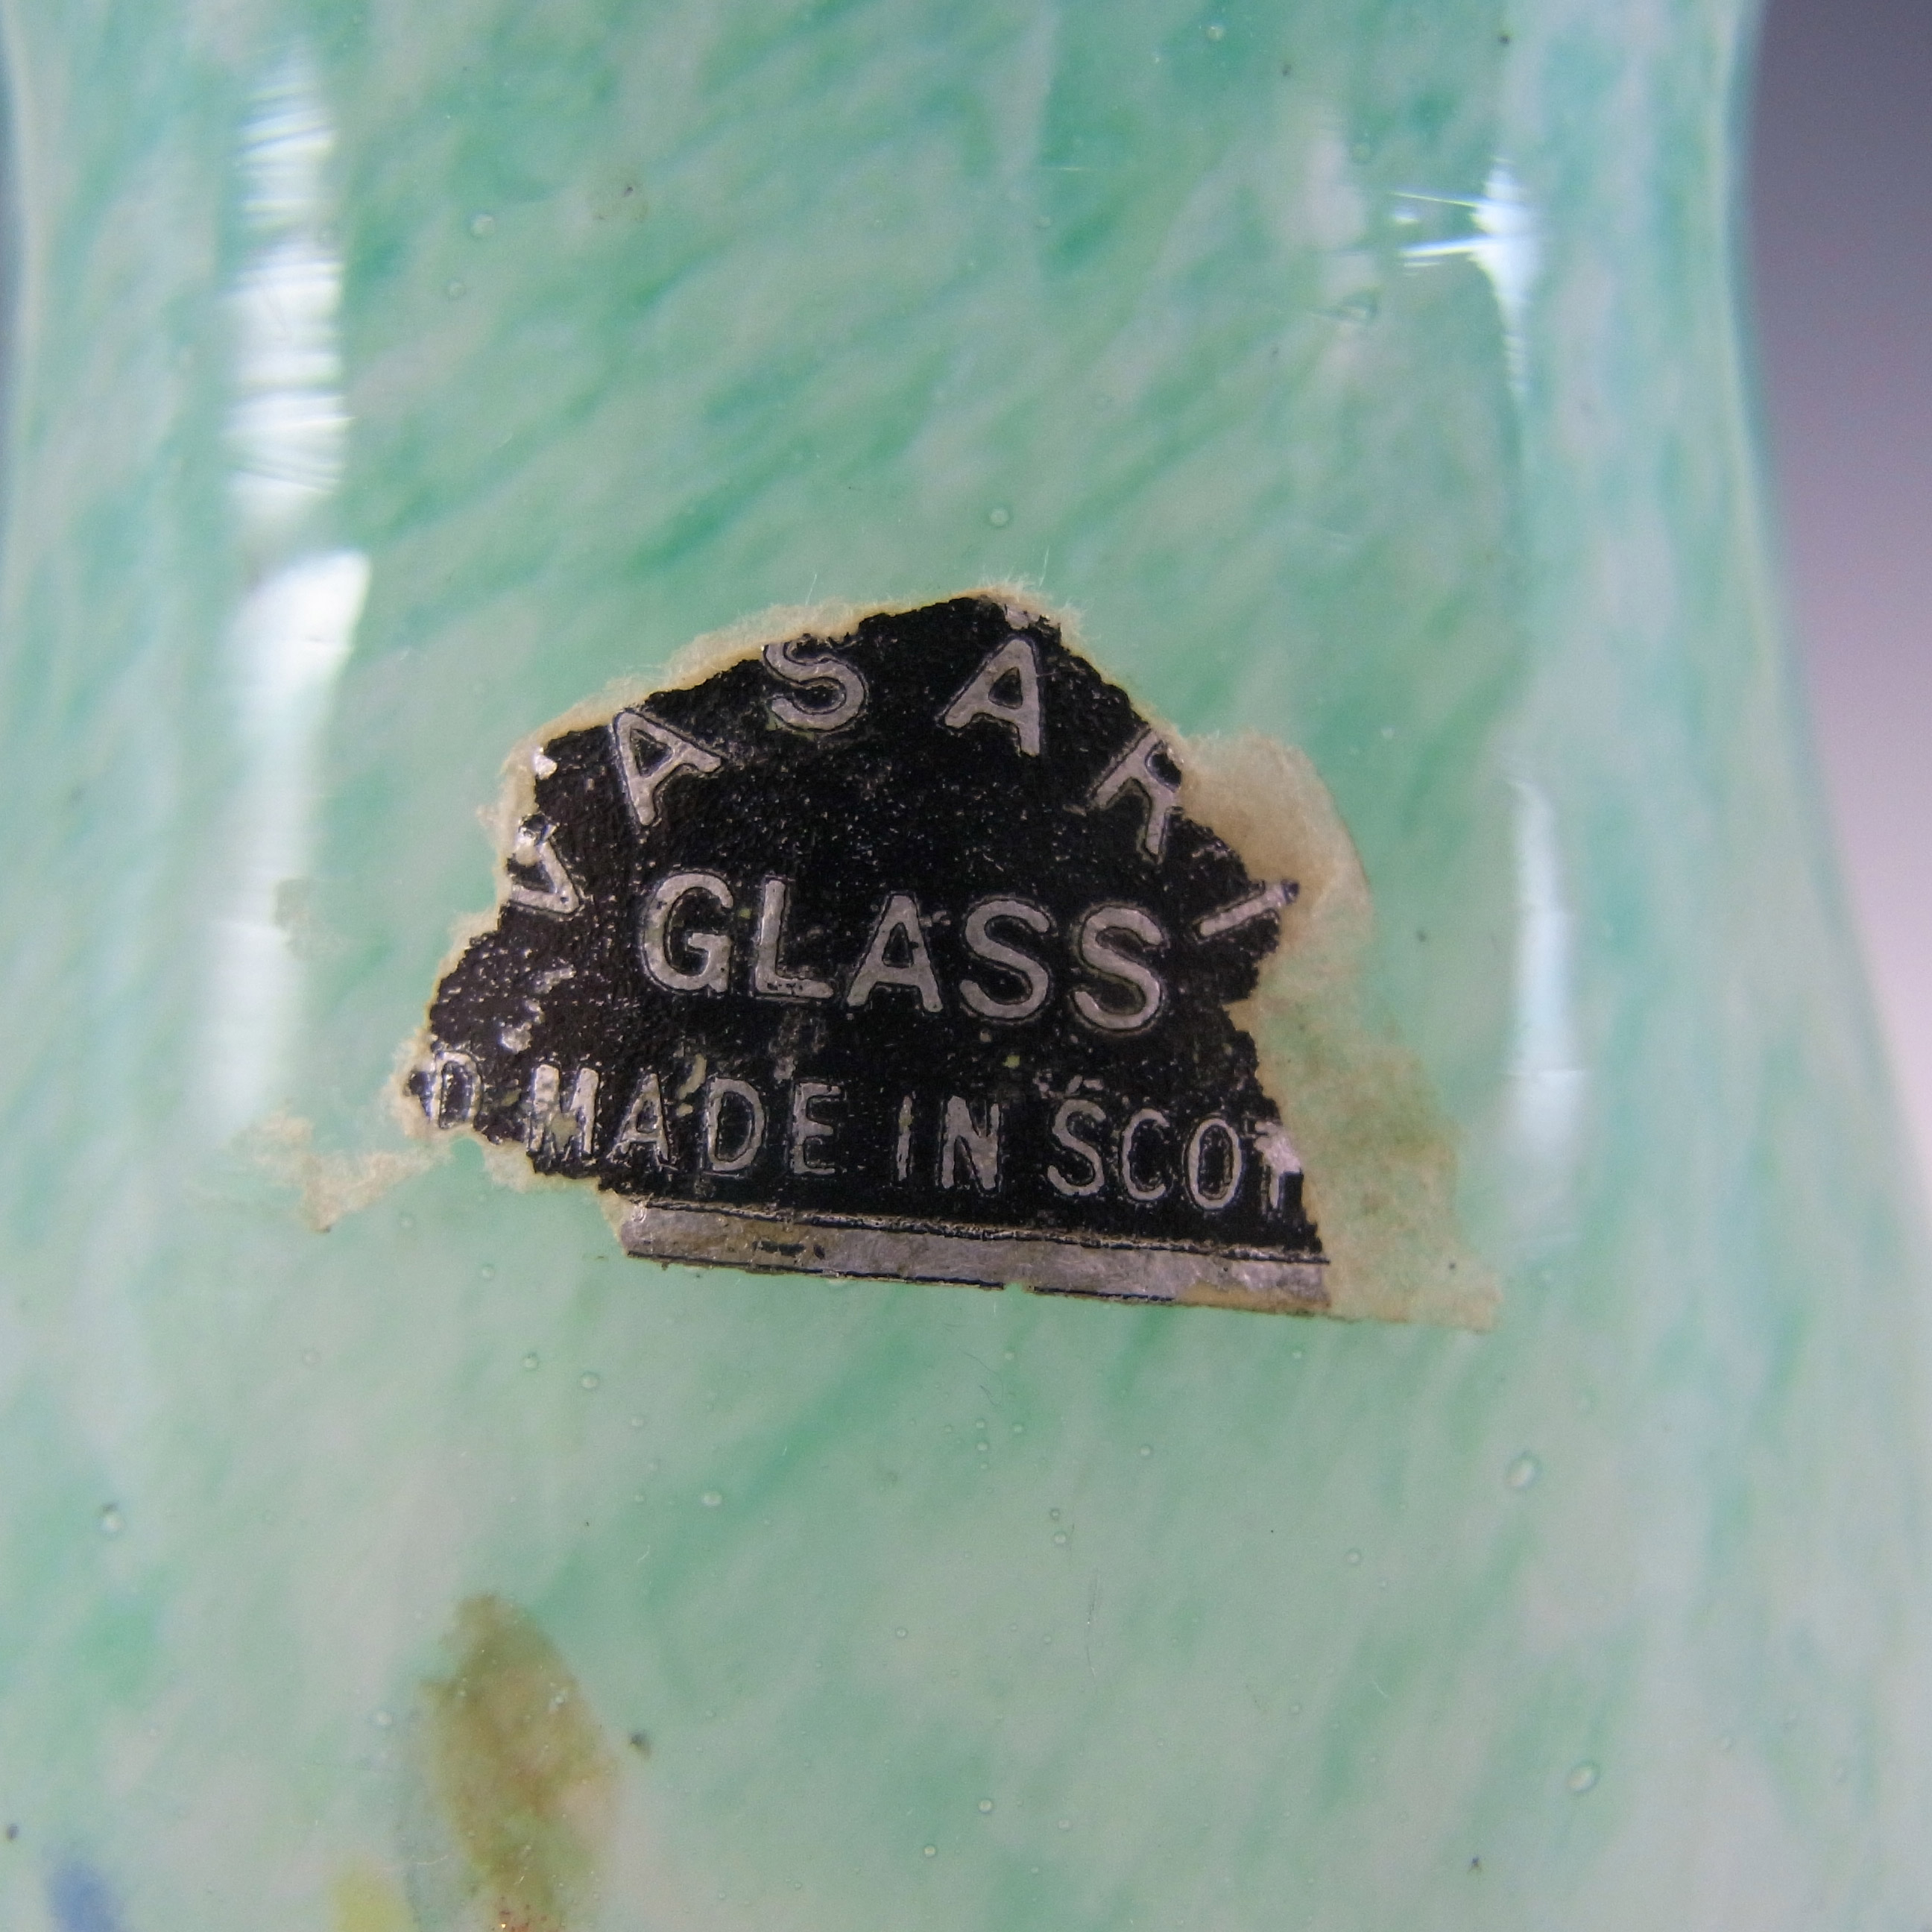 LABELLED Vasart Green & White Mottled Scottish Glass Vase V021 - Click Image to Close